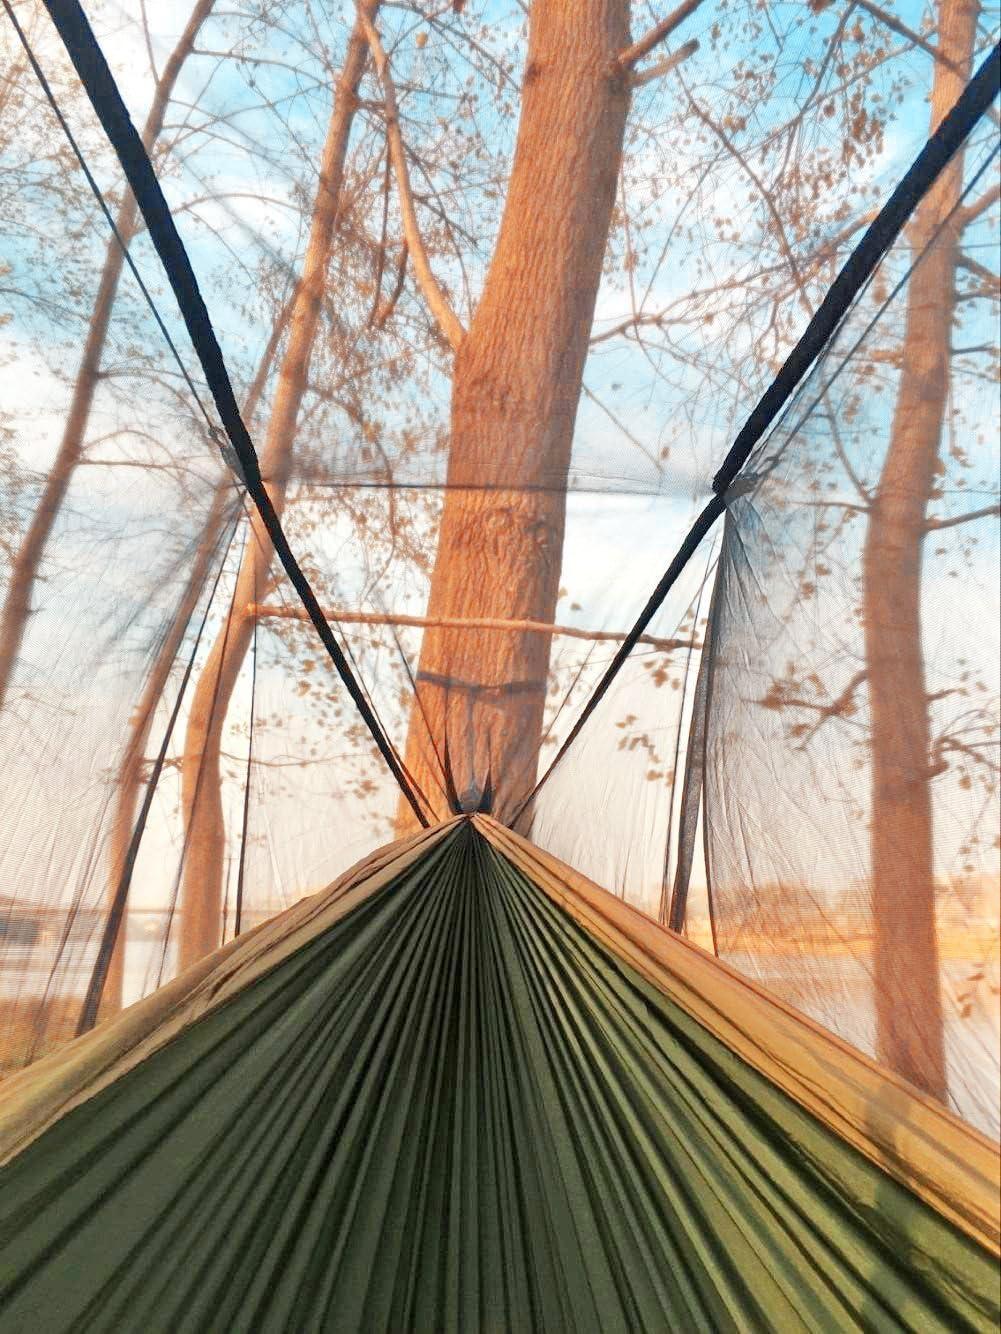 Sunyear Camping Hammock with Net & Sunyear Hammock Rain Fly Tent Tarp  Provides Effective Protection Against Rain